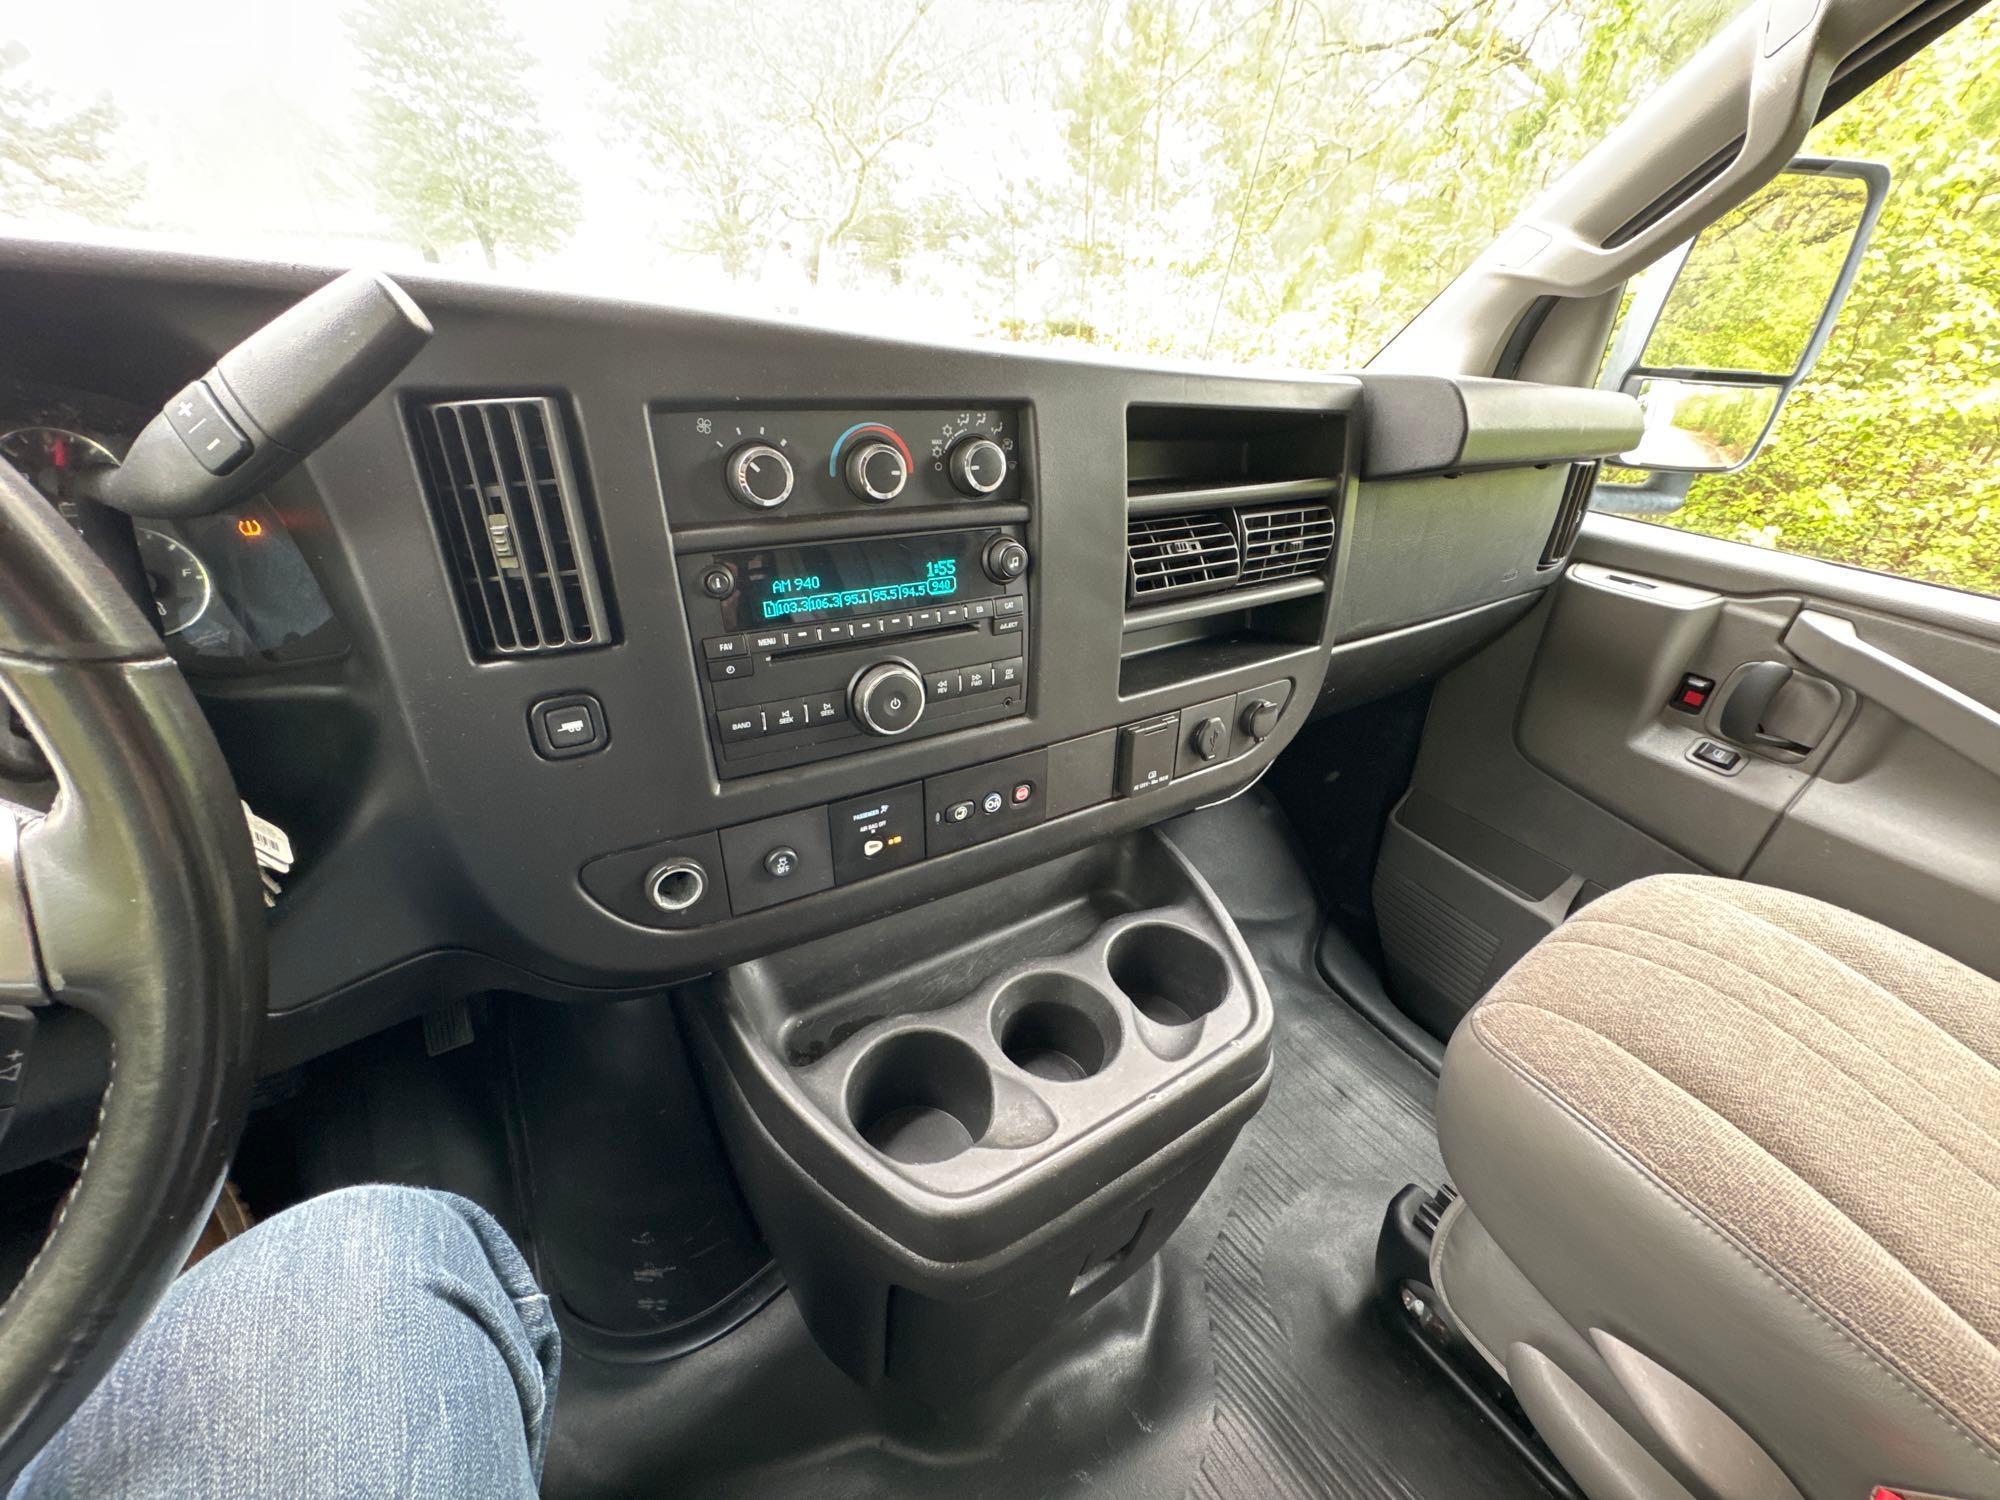 2017 Chevrolet Express Van, VIN # 1GB0GRFG0H1342076